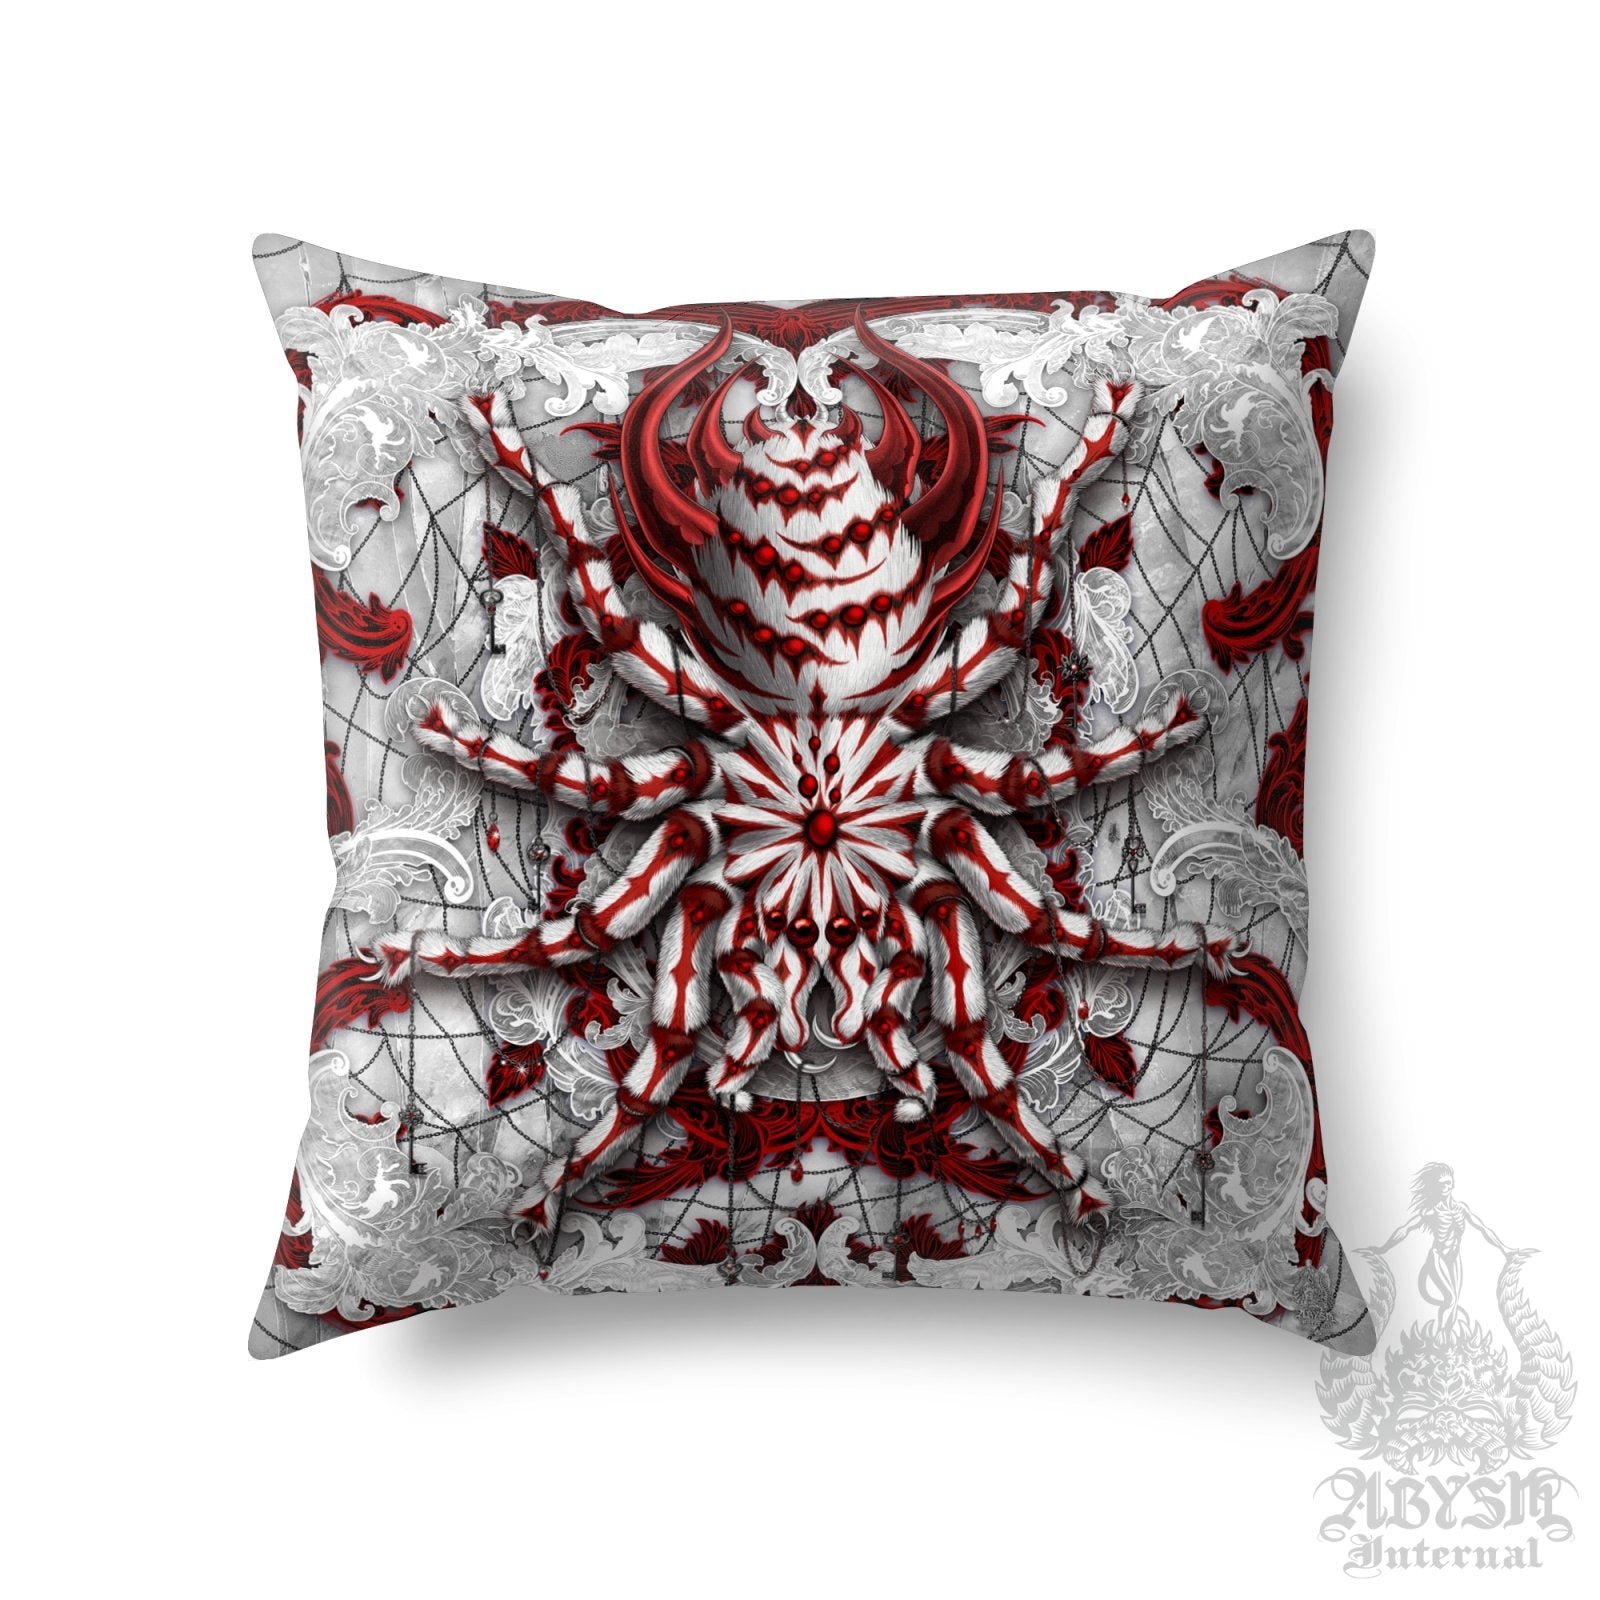 Bloody White Goth Throw Pillow, Decorative Accent Cushion, Gothic Room Decor, Dark Art, Alternative Home - Tarantula, Spider - Abysm Internal